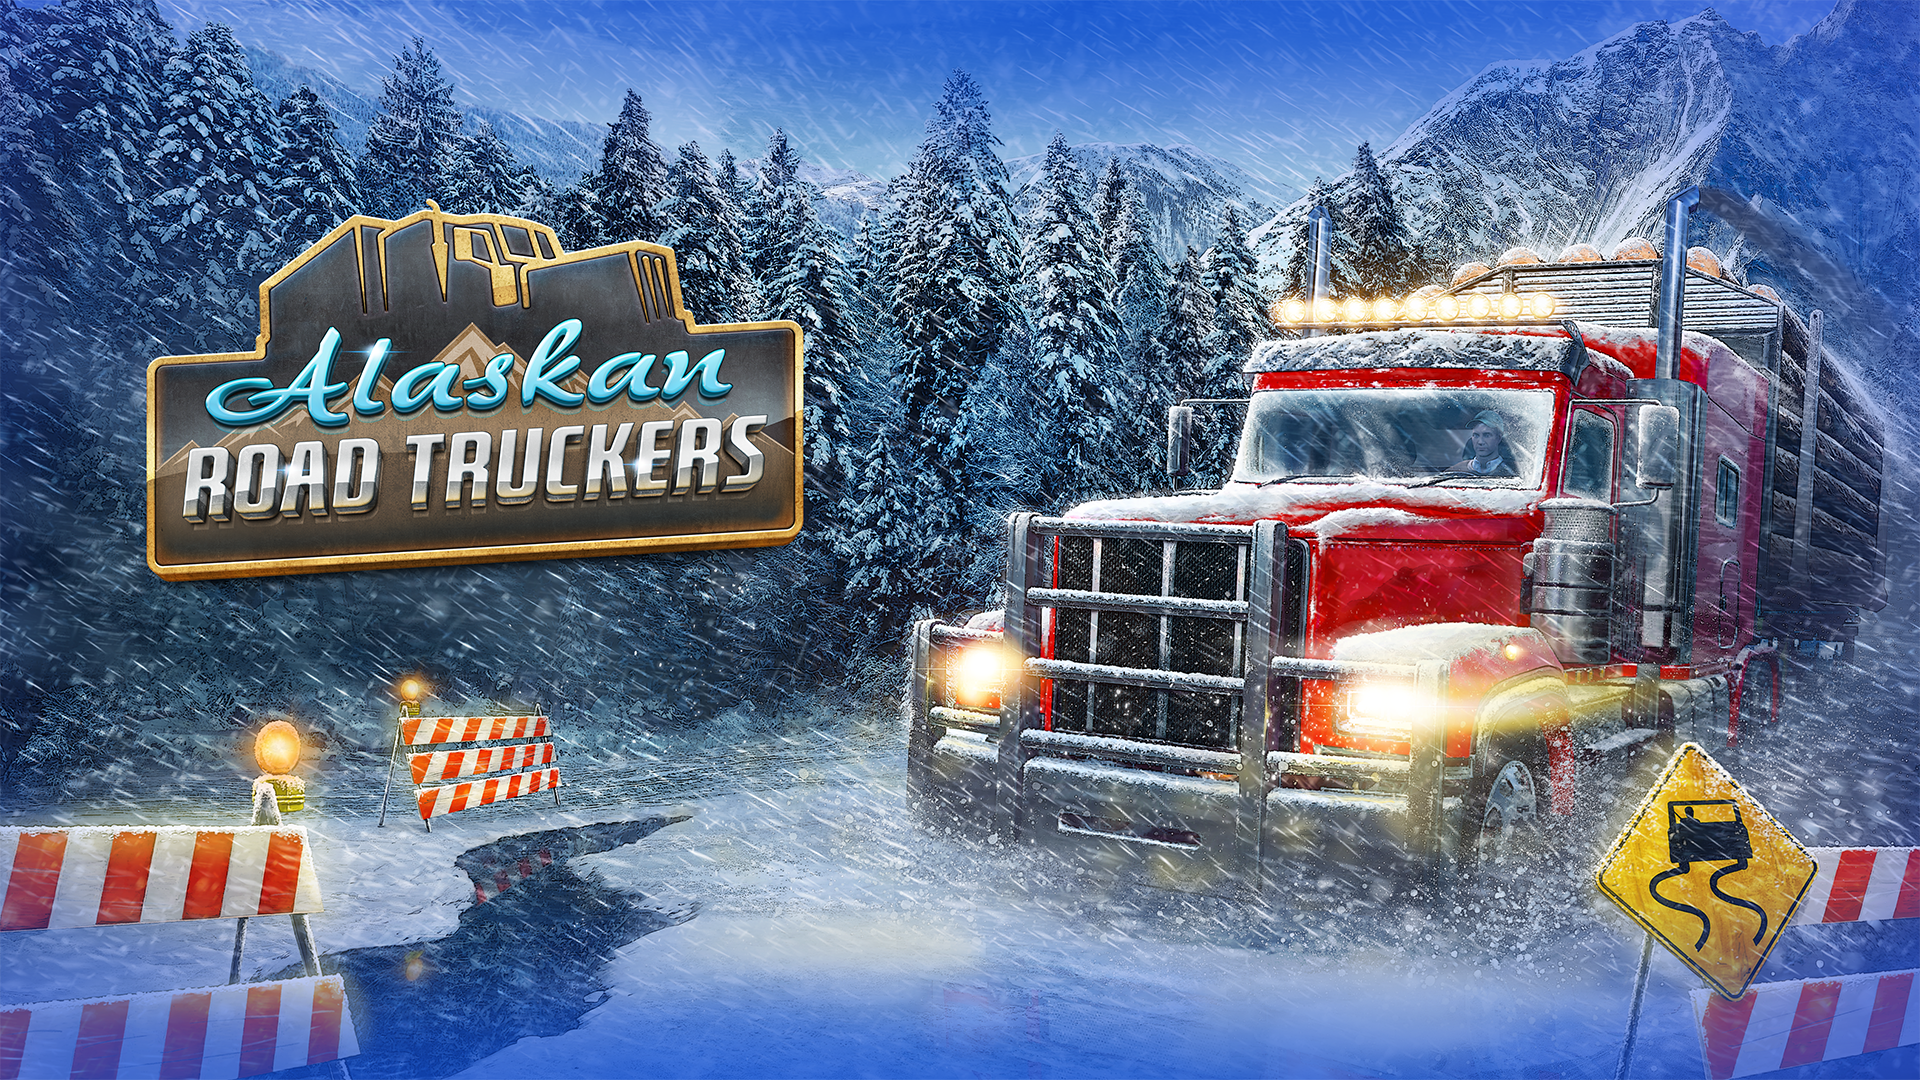 Alaskan Truck Simulator - Extended Gameplay Trailer